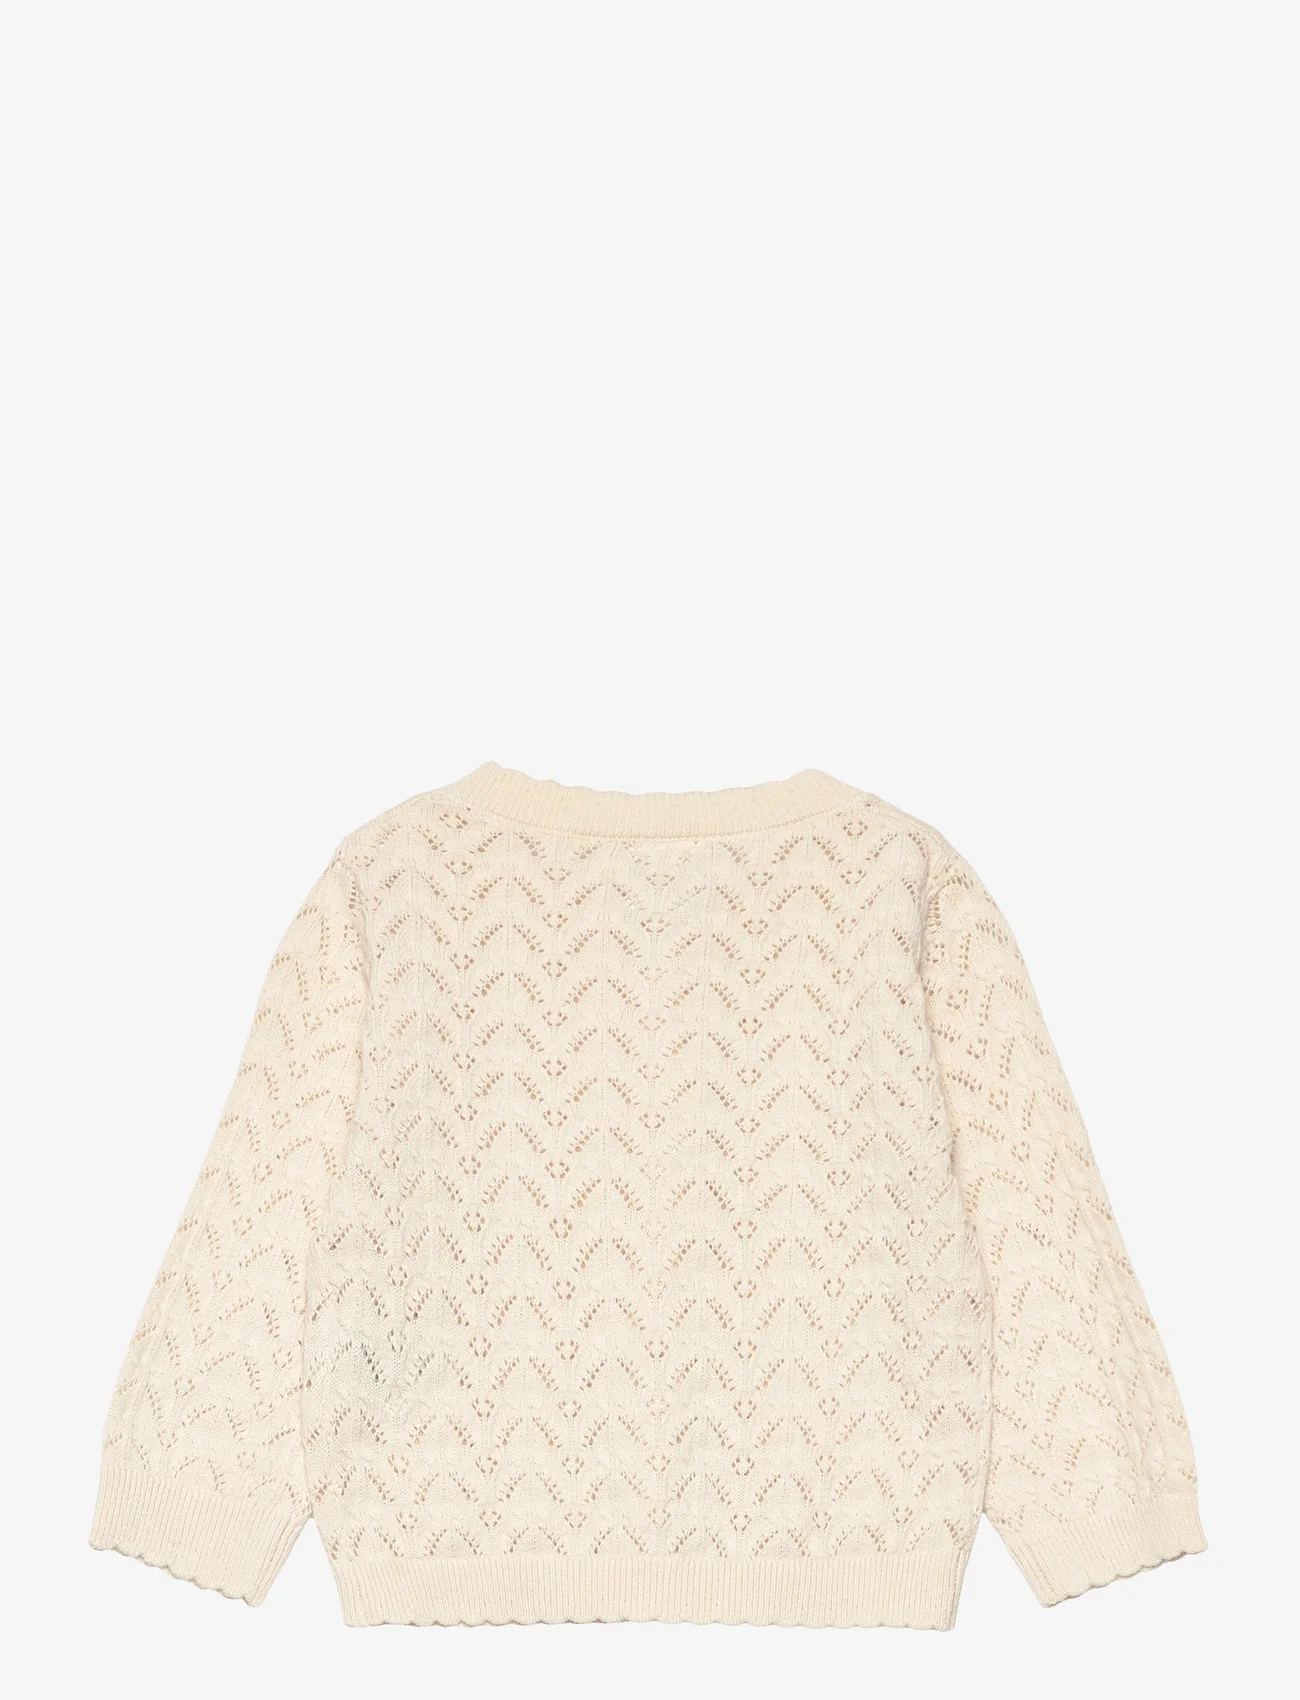 Lindex - Cardigan Pattern knit - kardigany - light beige - 1